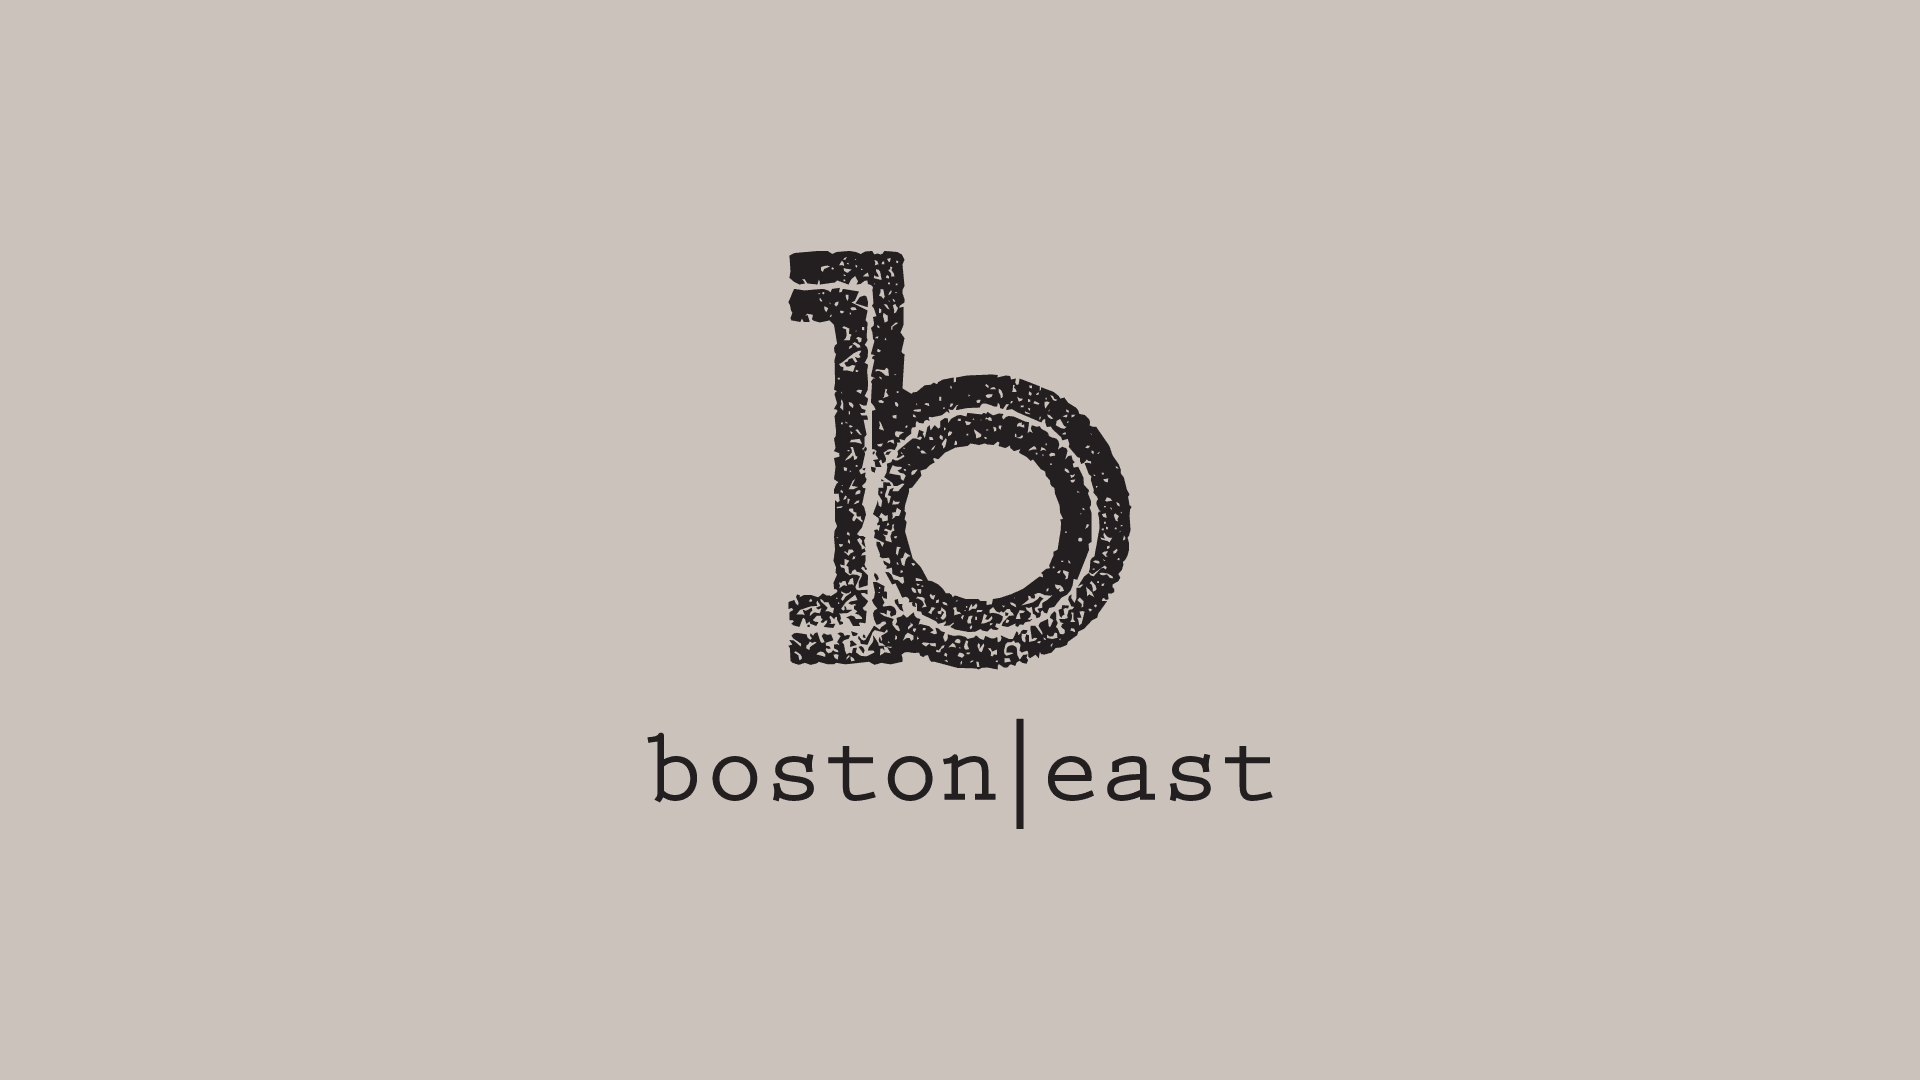 Boston East logo on beige background